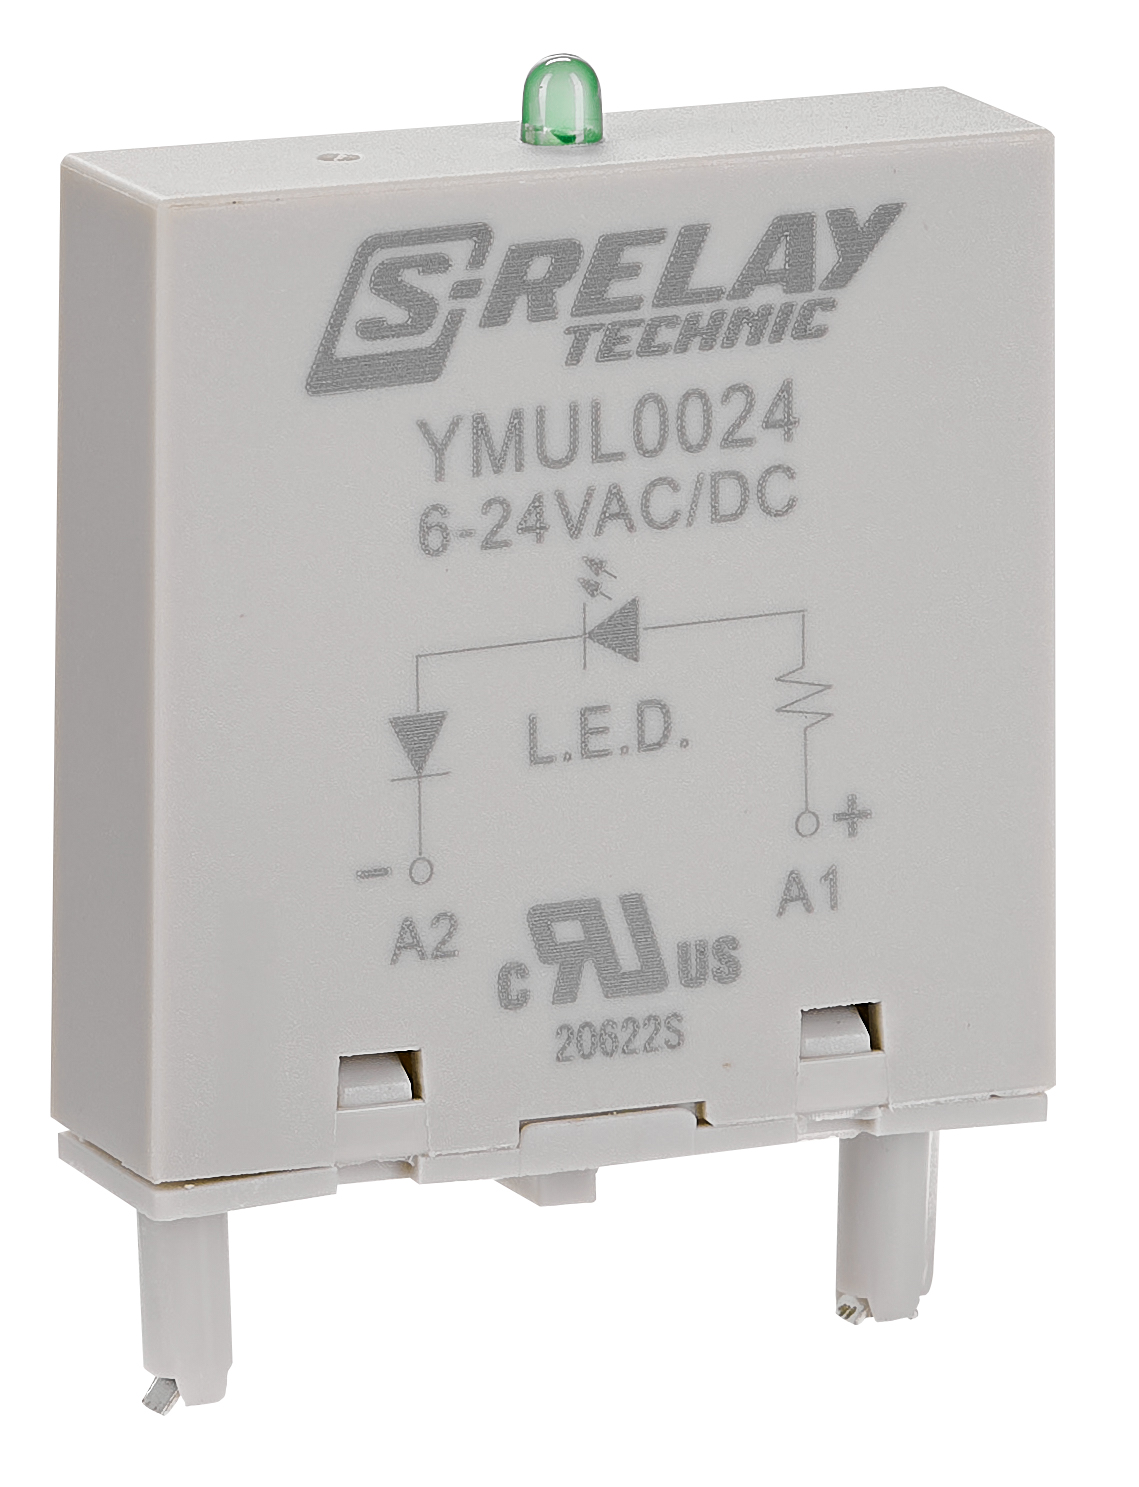 Schutzmodul LED 6-24VDC/AC für Relaissockel YMU